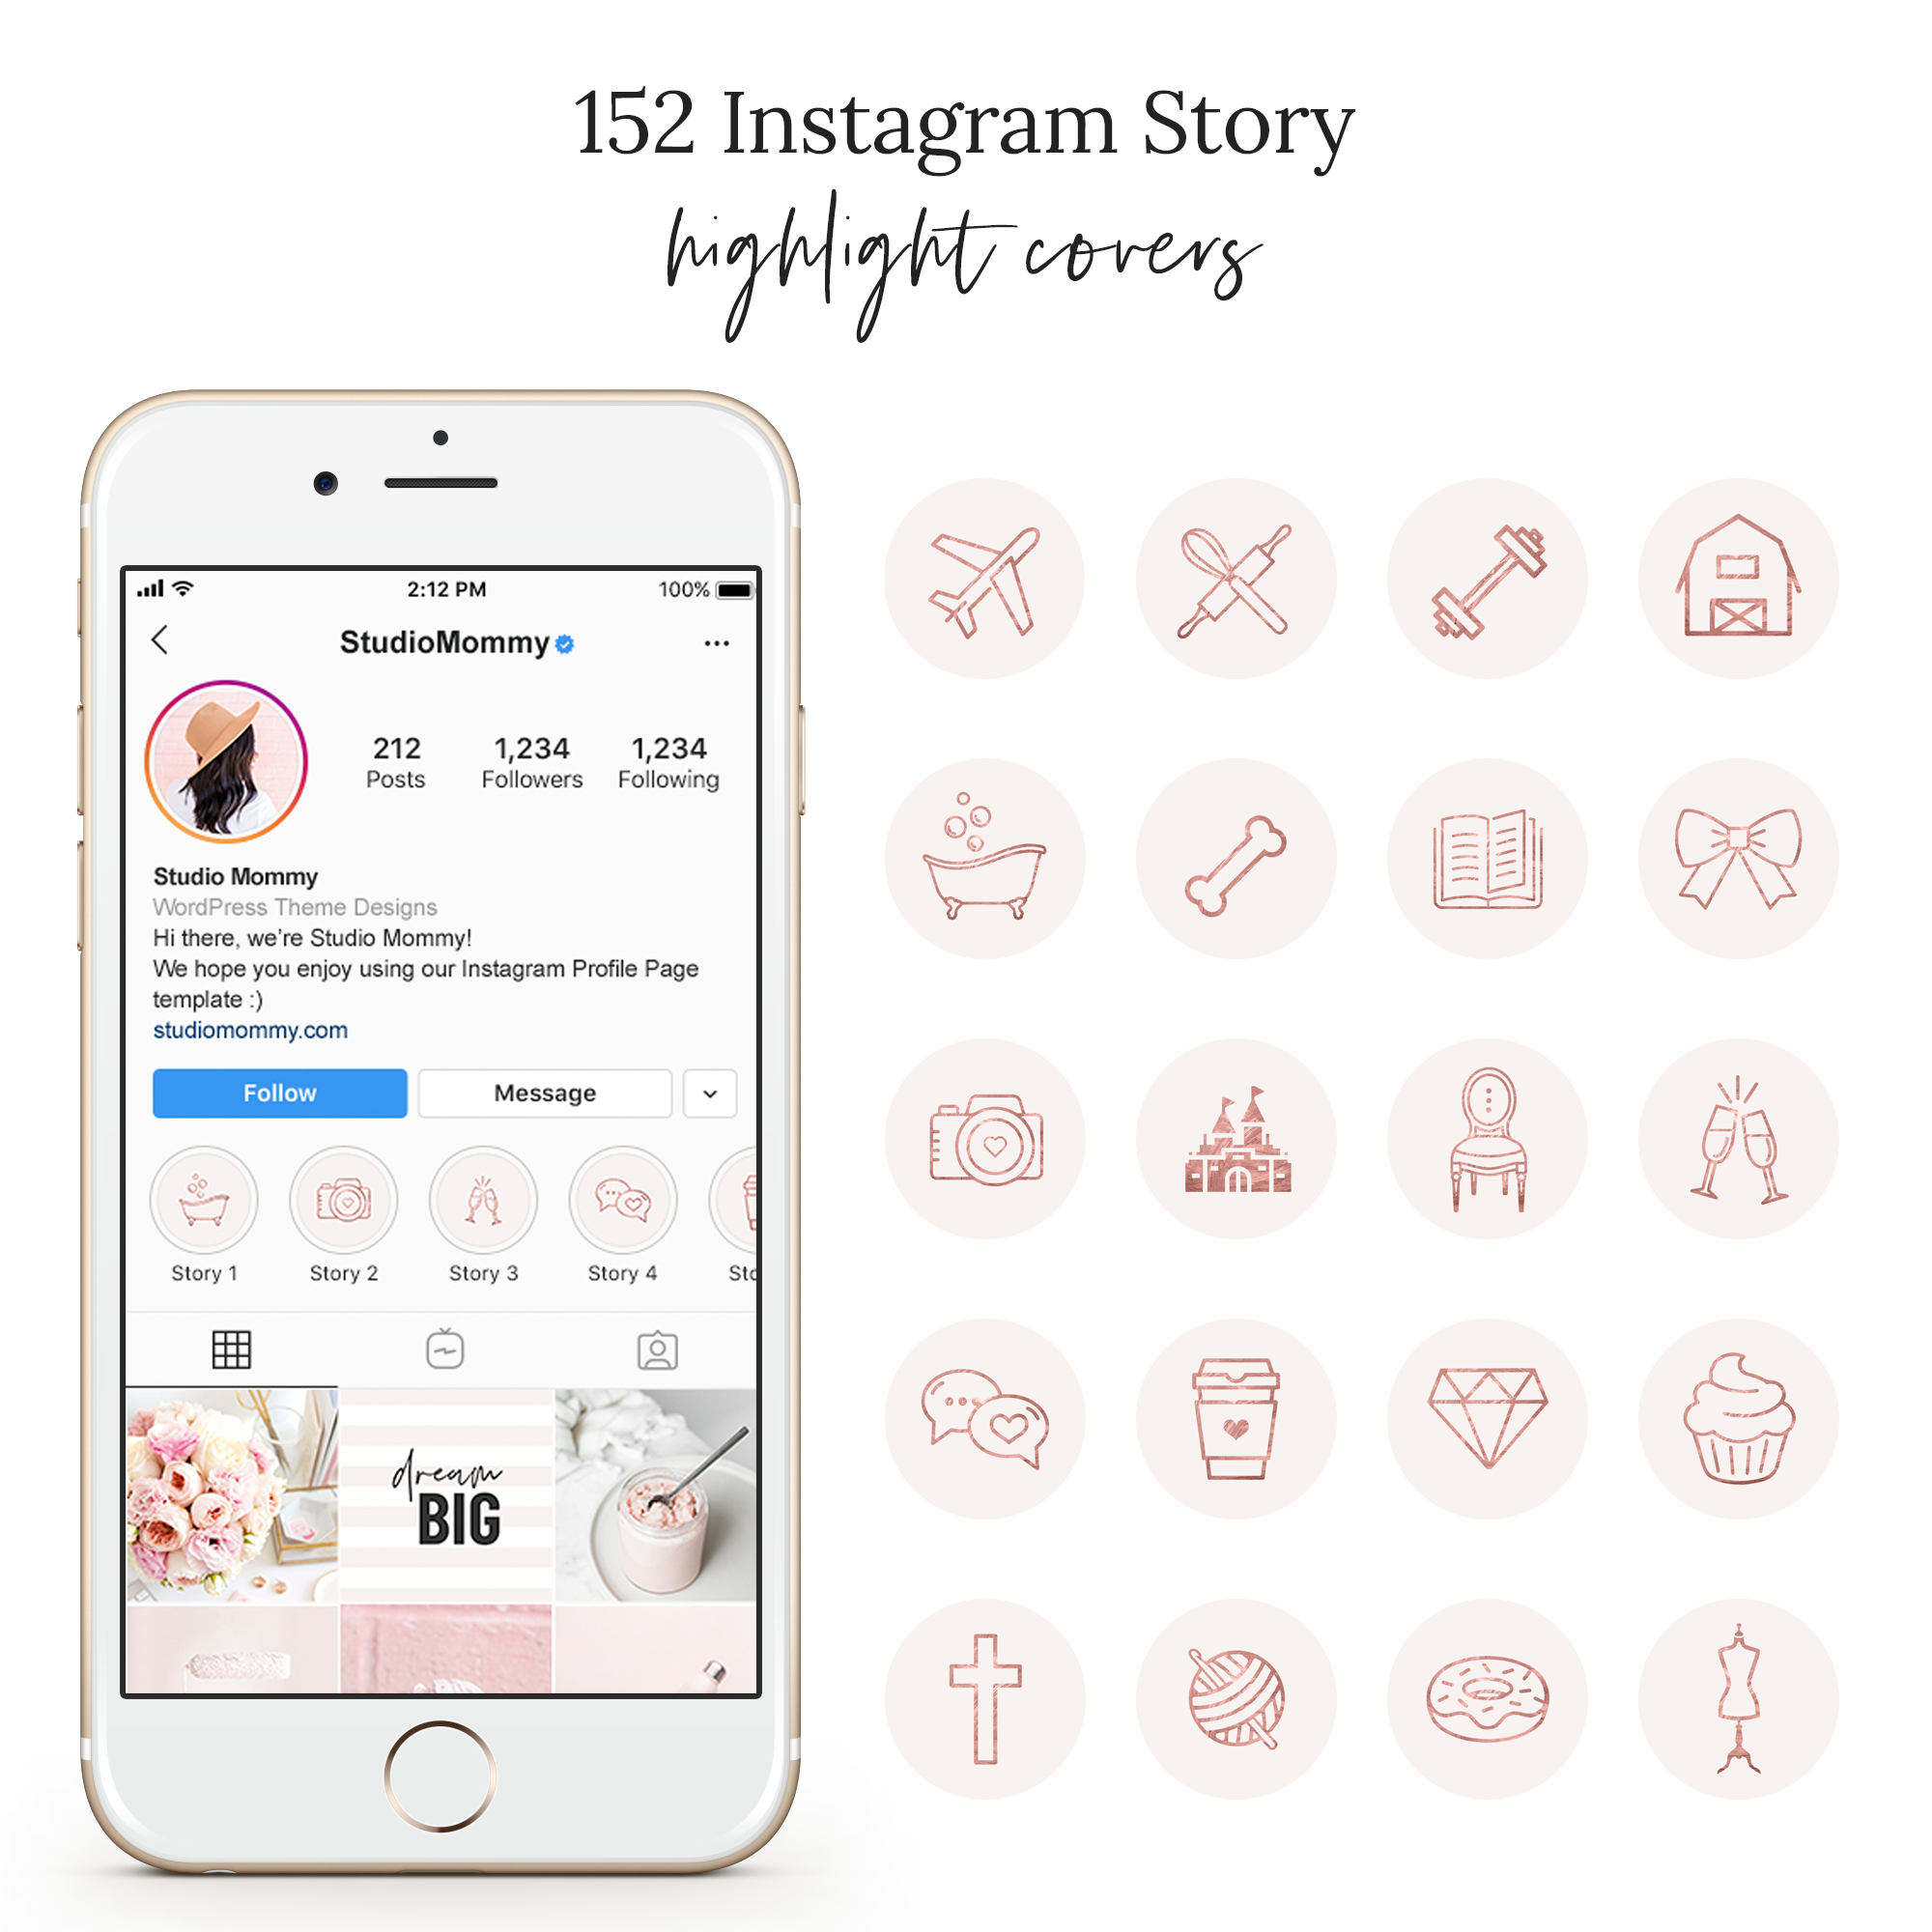 Blush Instagram Highlight Covers